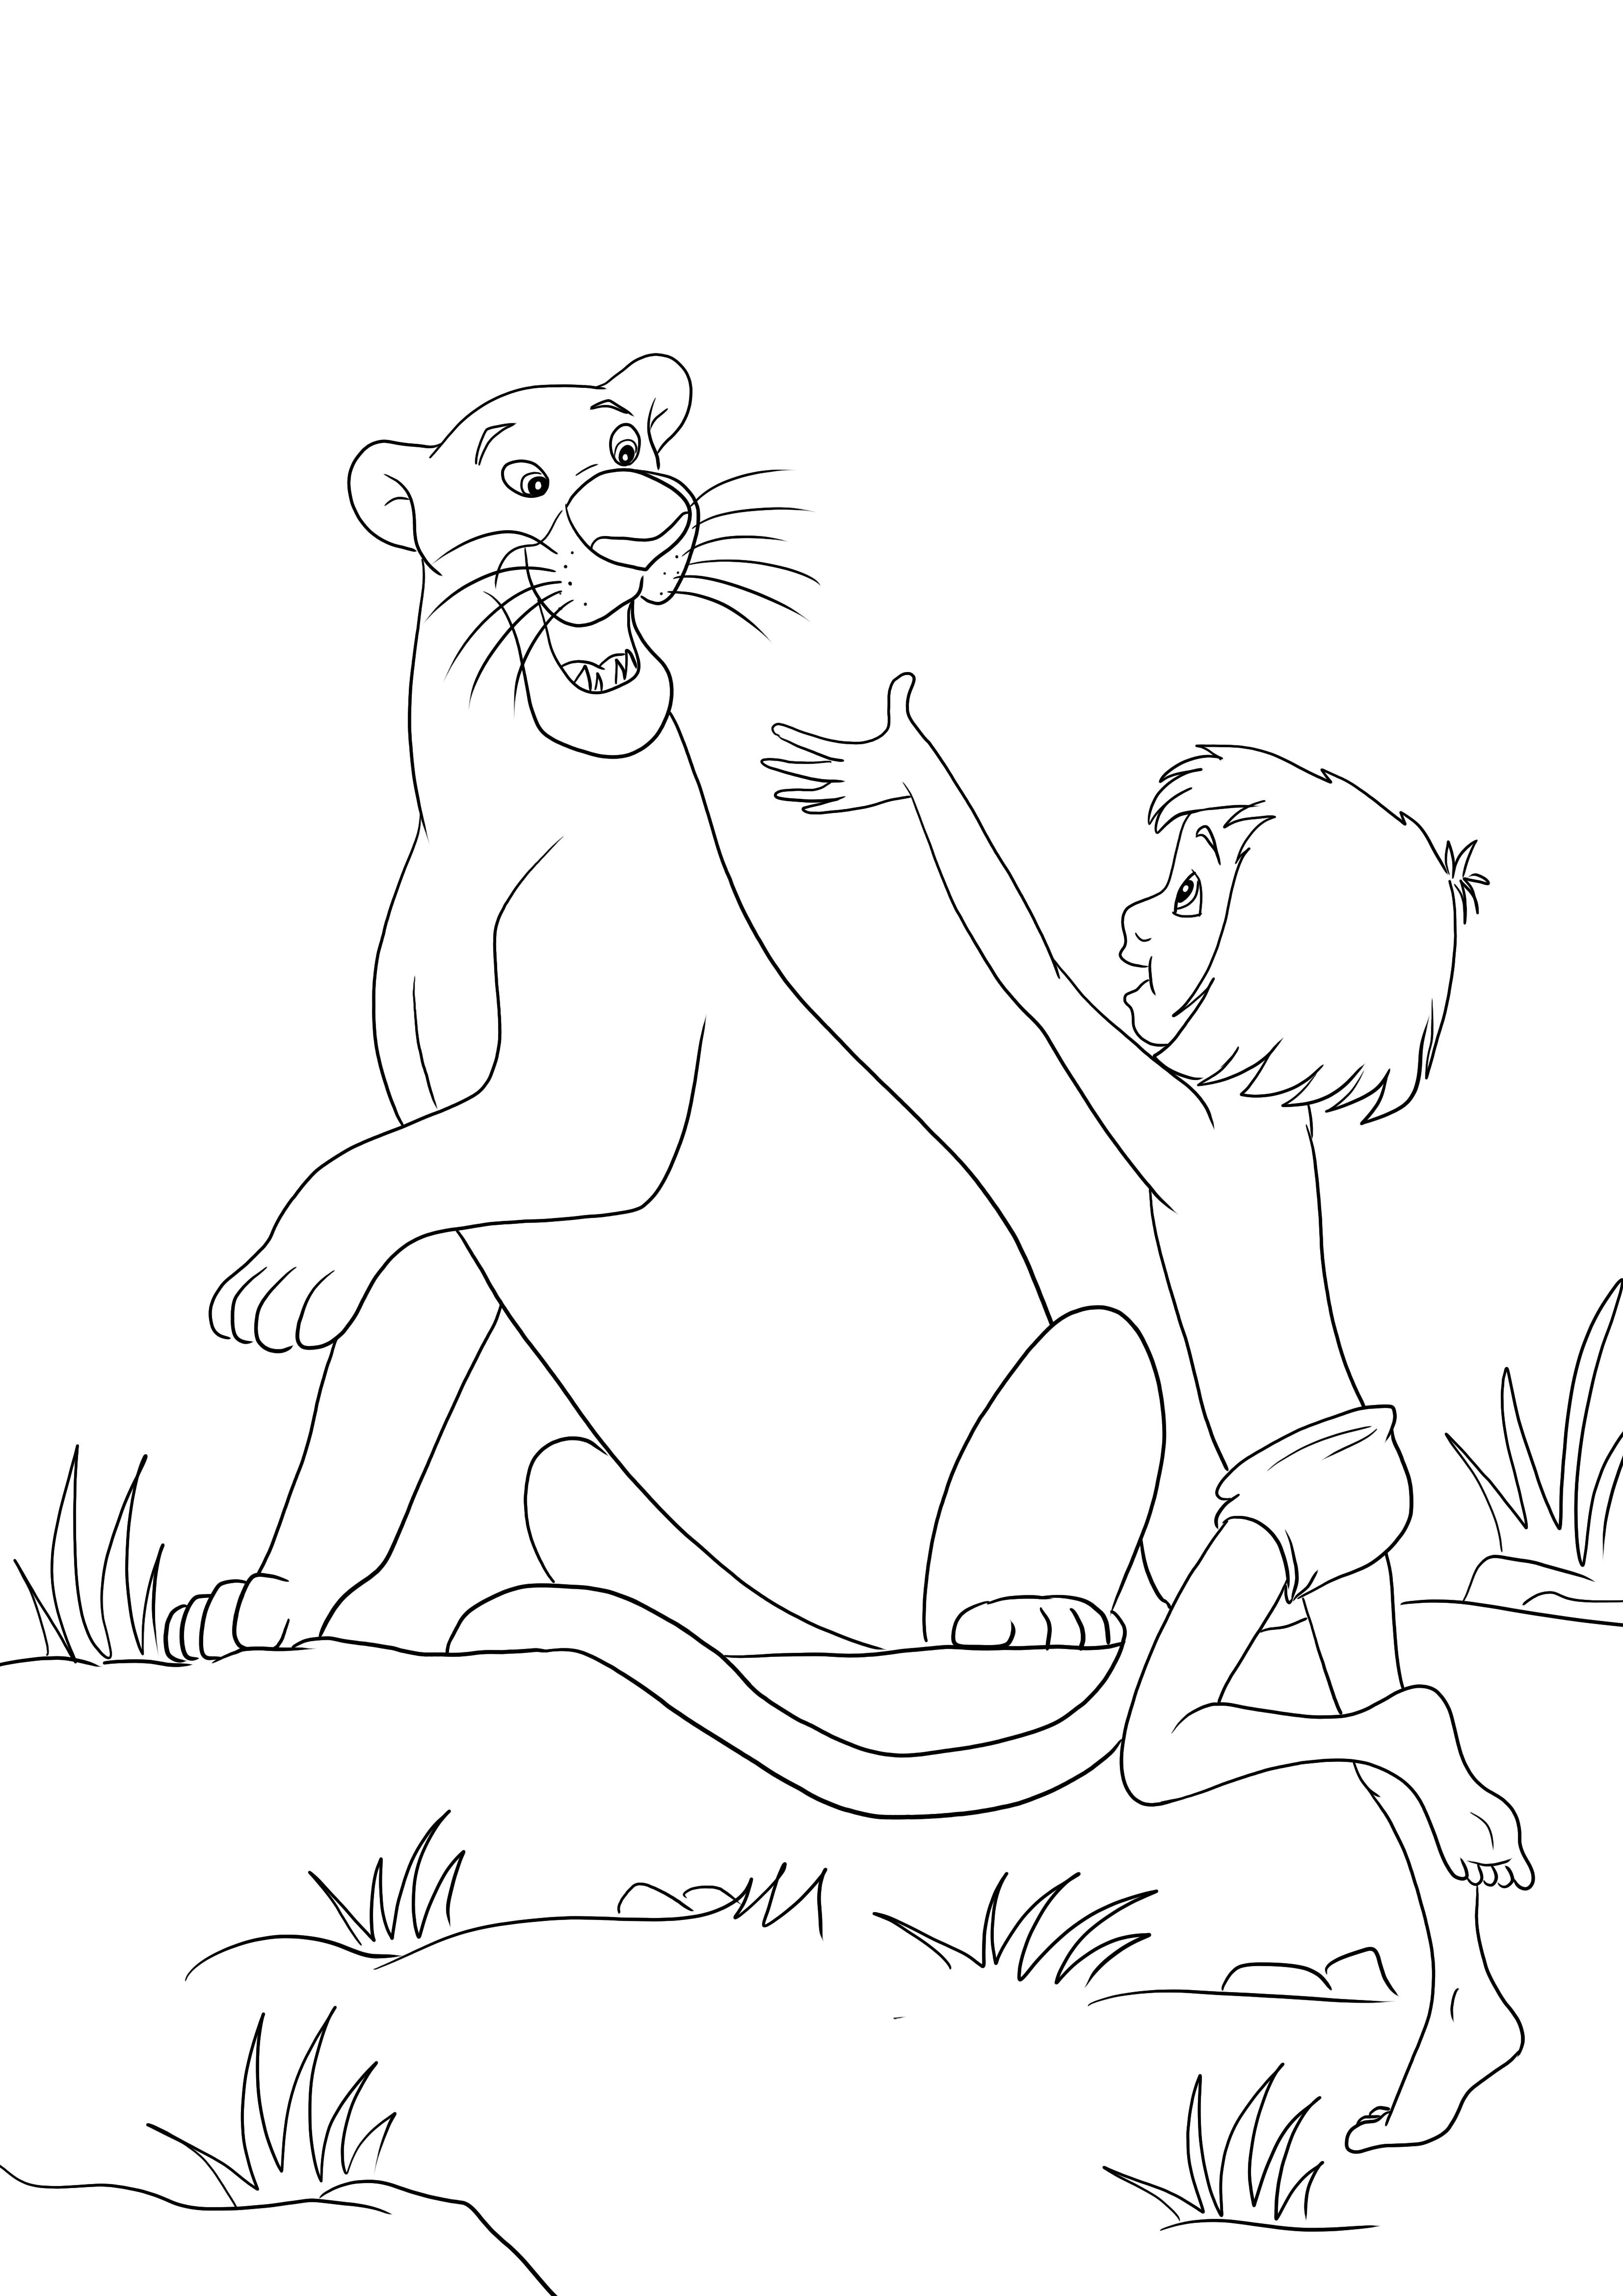 Mowgli dan Bagheera senang mewarnai dan mengunduh gambar bersama-sama